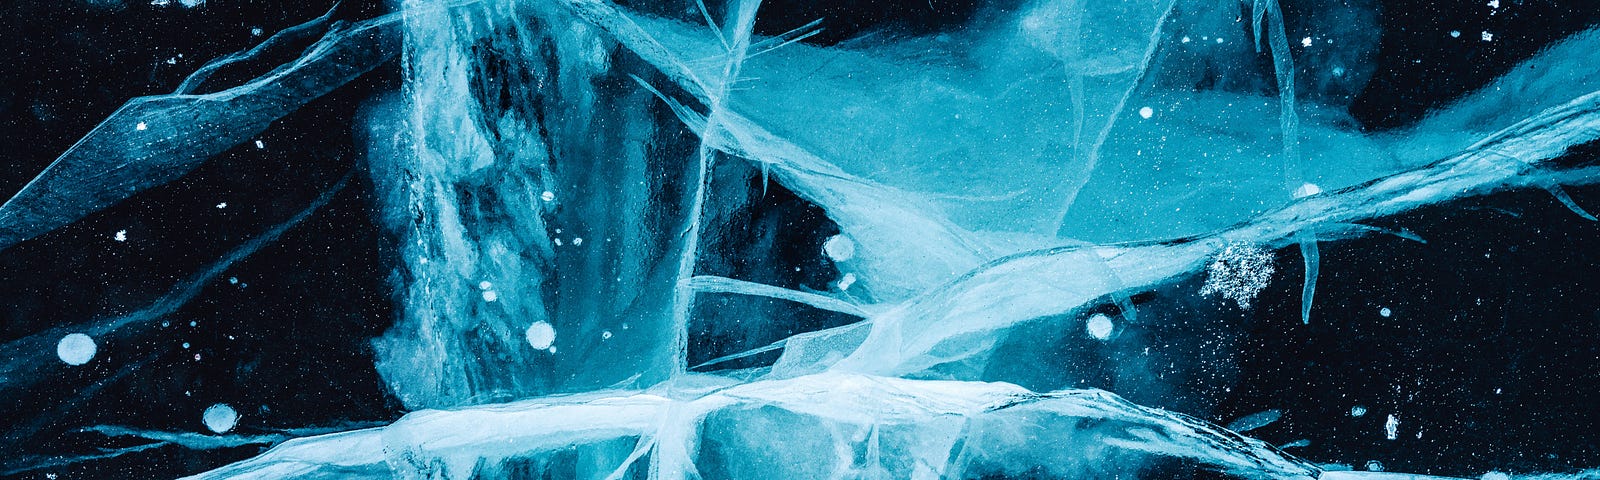 A sheet of ice cracking apart